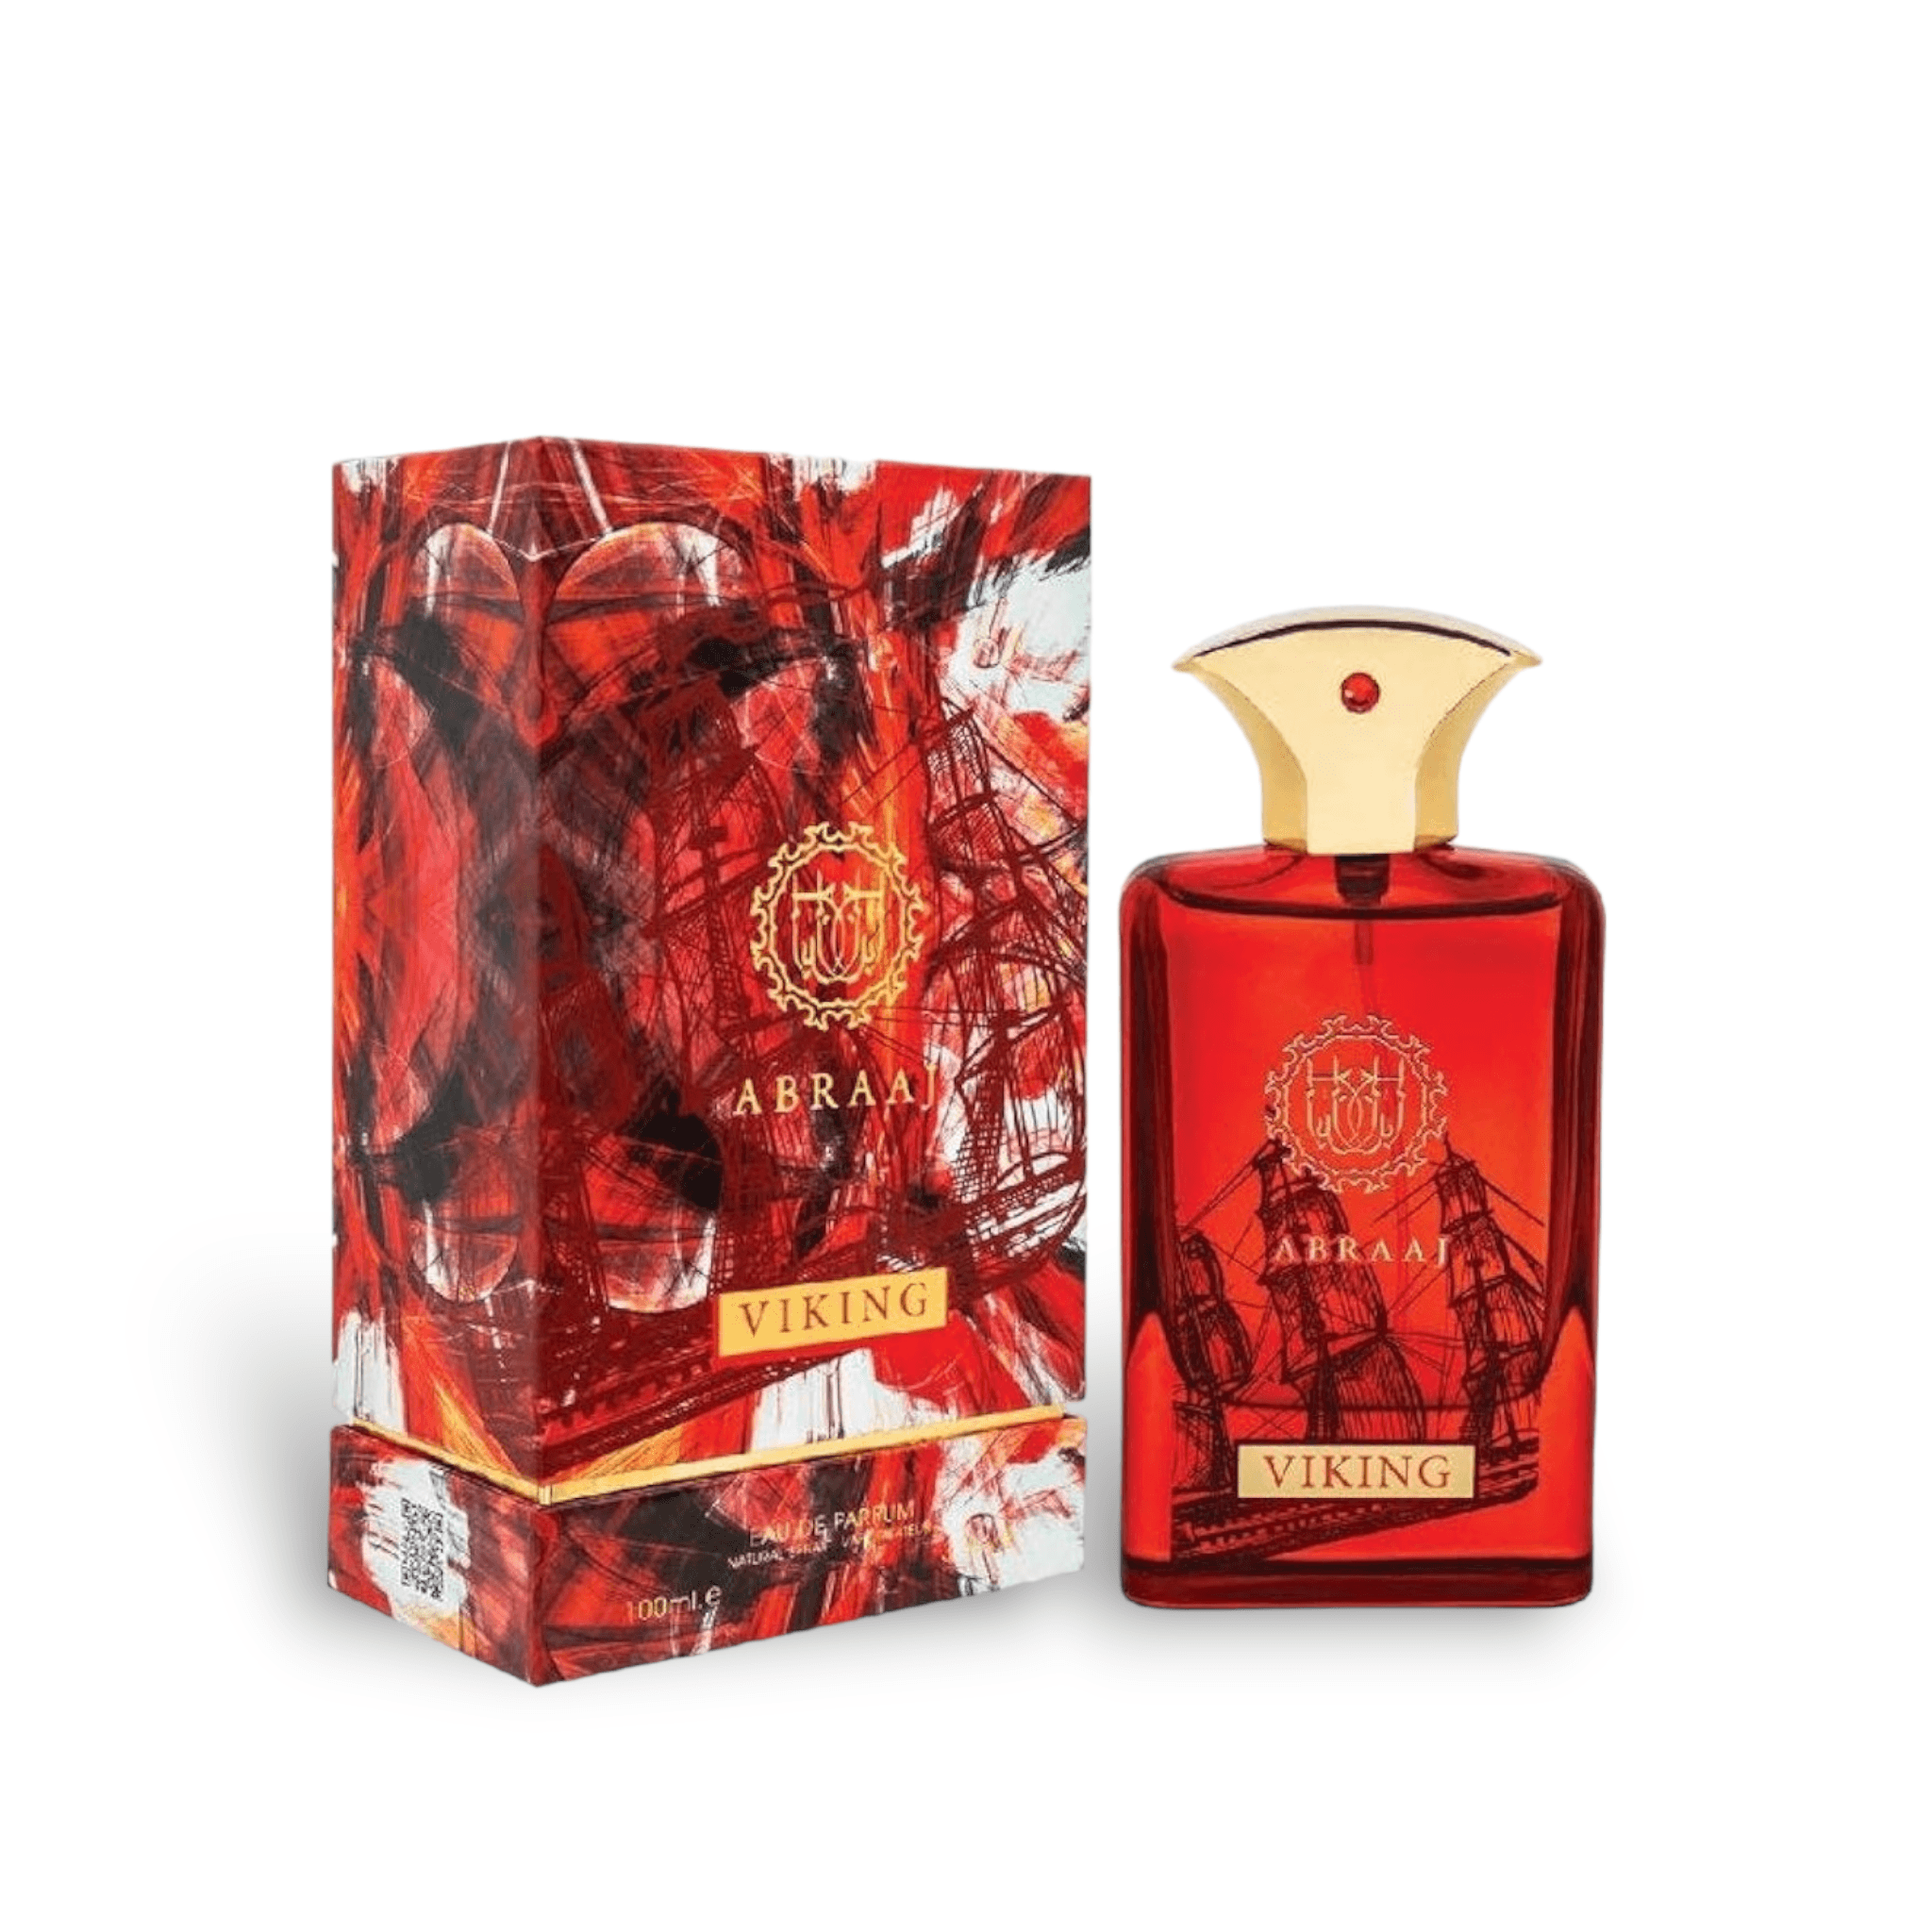 Abraaj Viking Perfume Eau De Parfum 100Ml By Fa Paris (Fragrance World) (Inspired By Cd Viking)